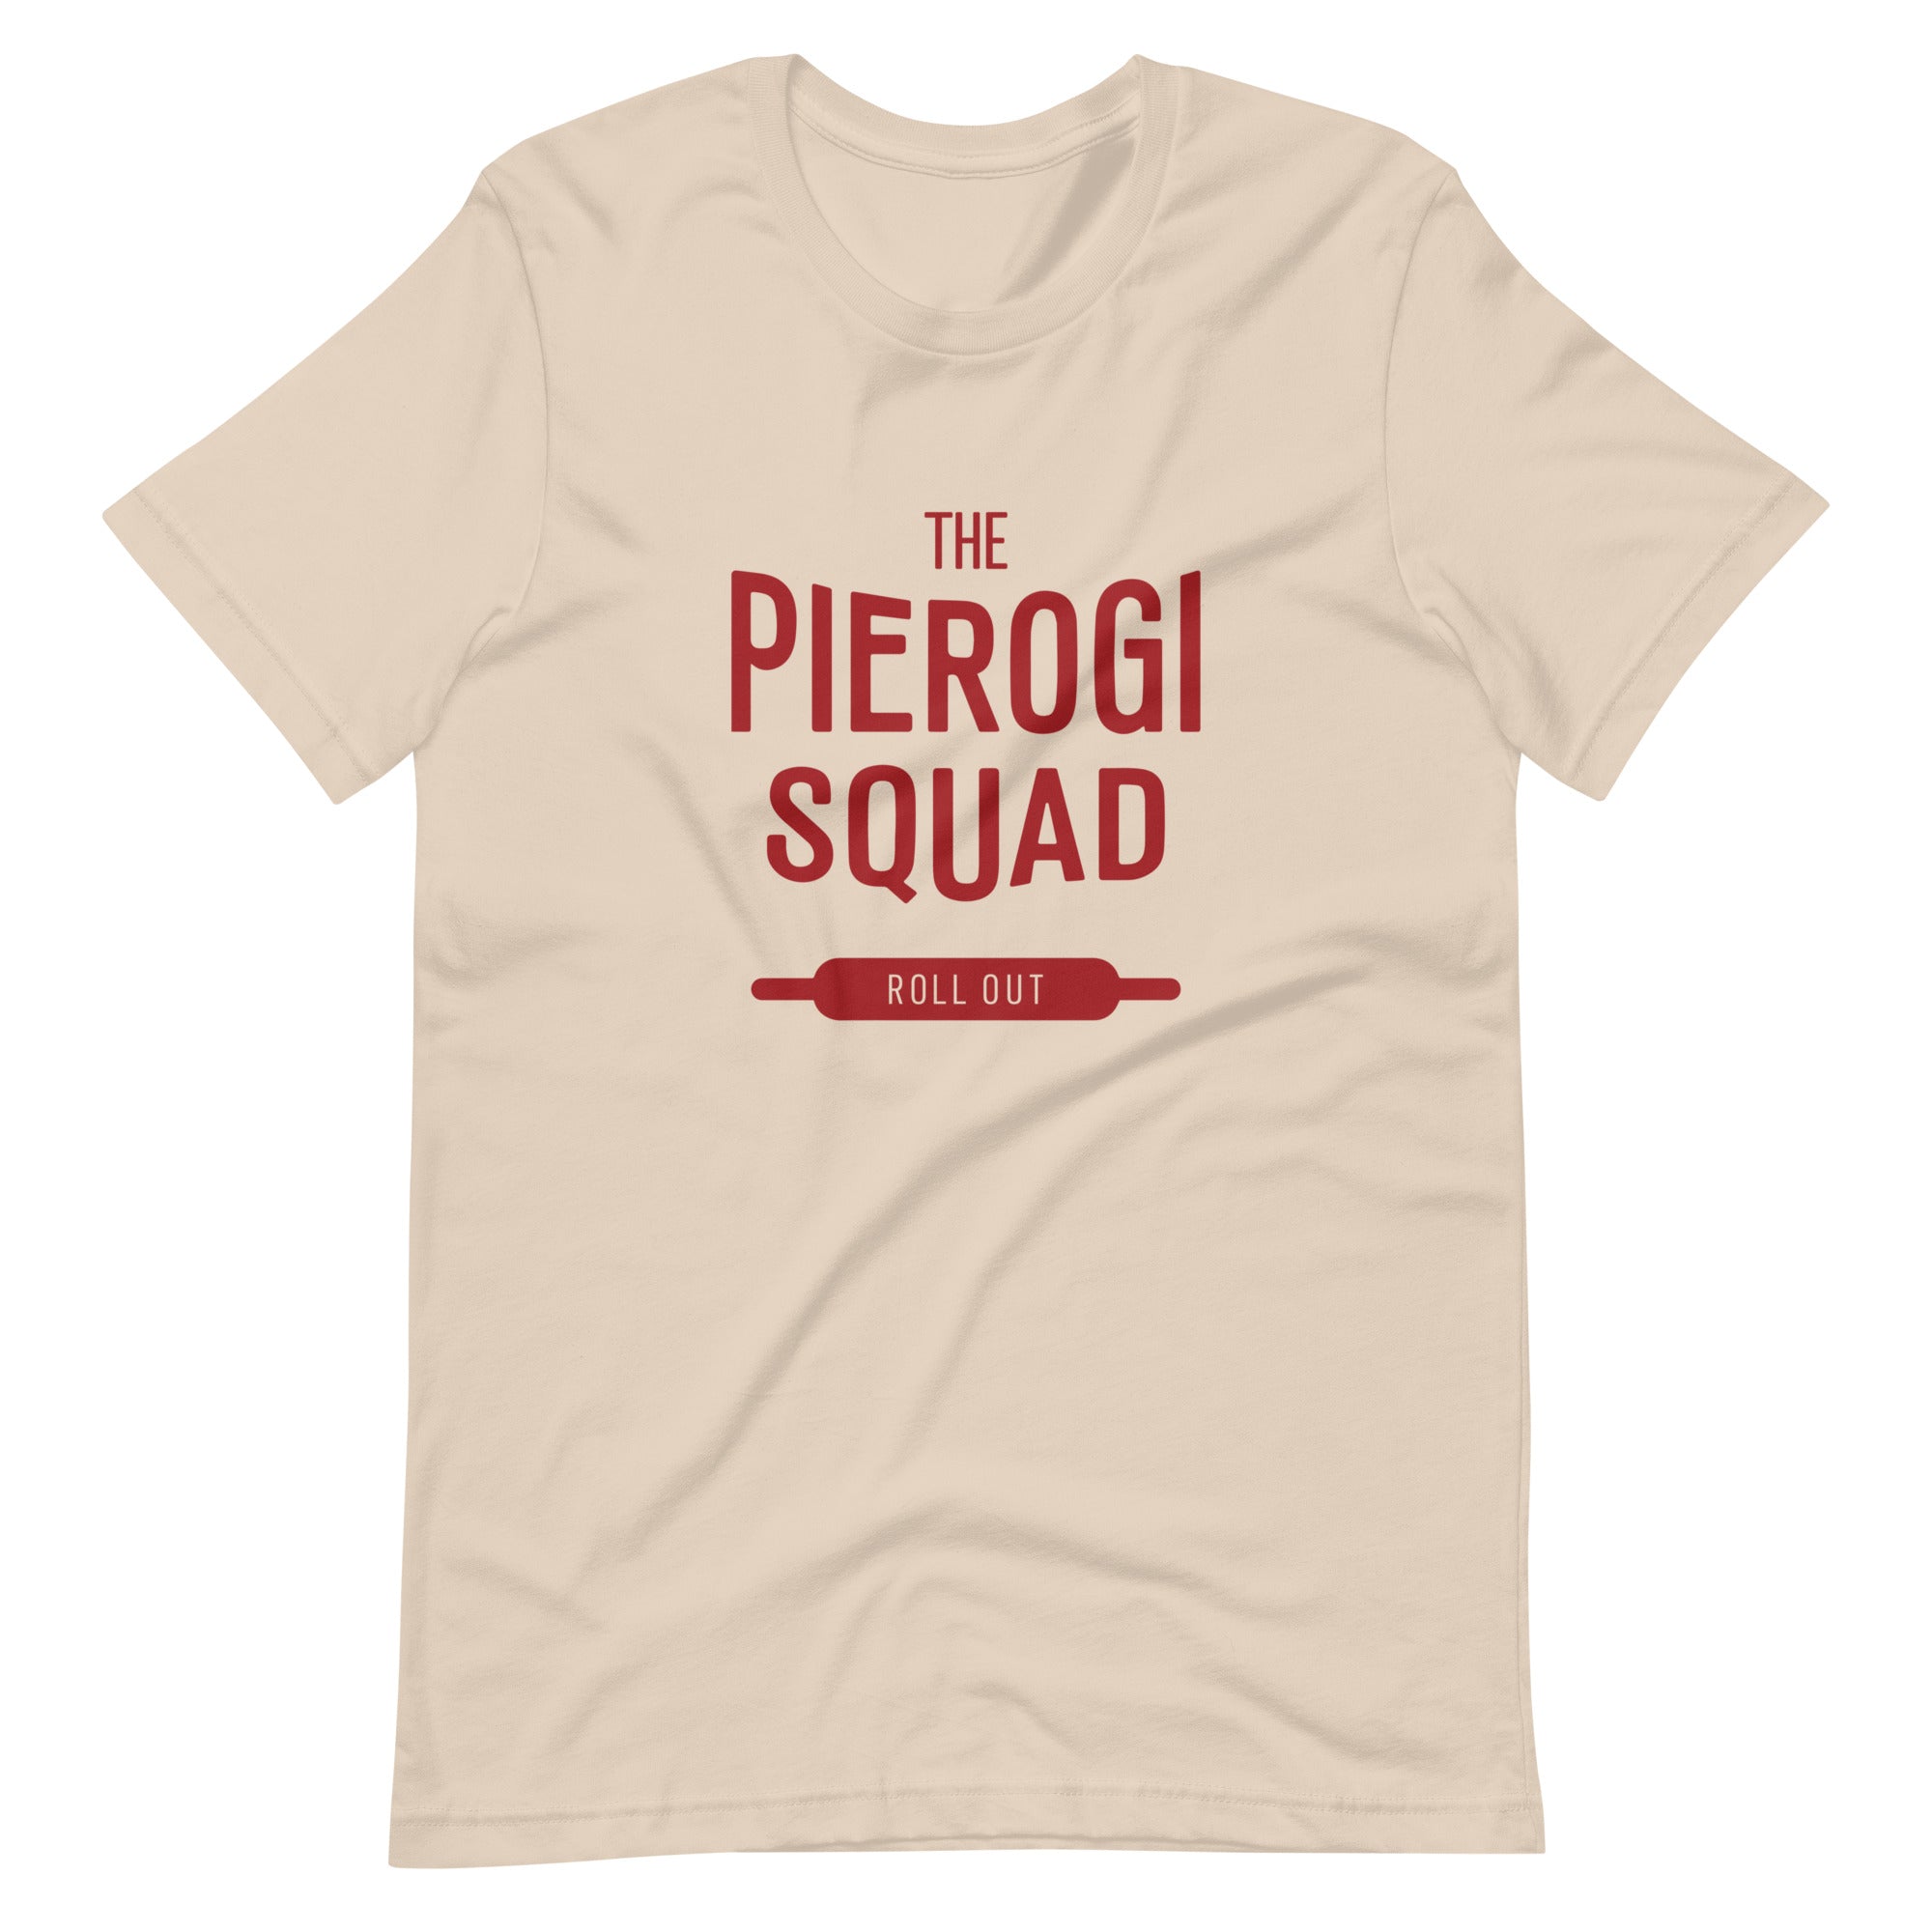 Pierogi Squad tee